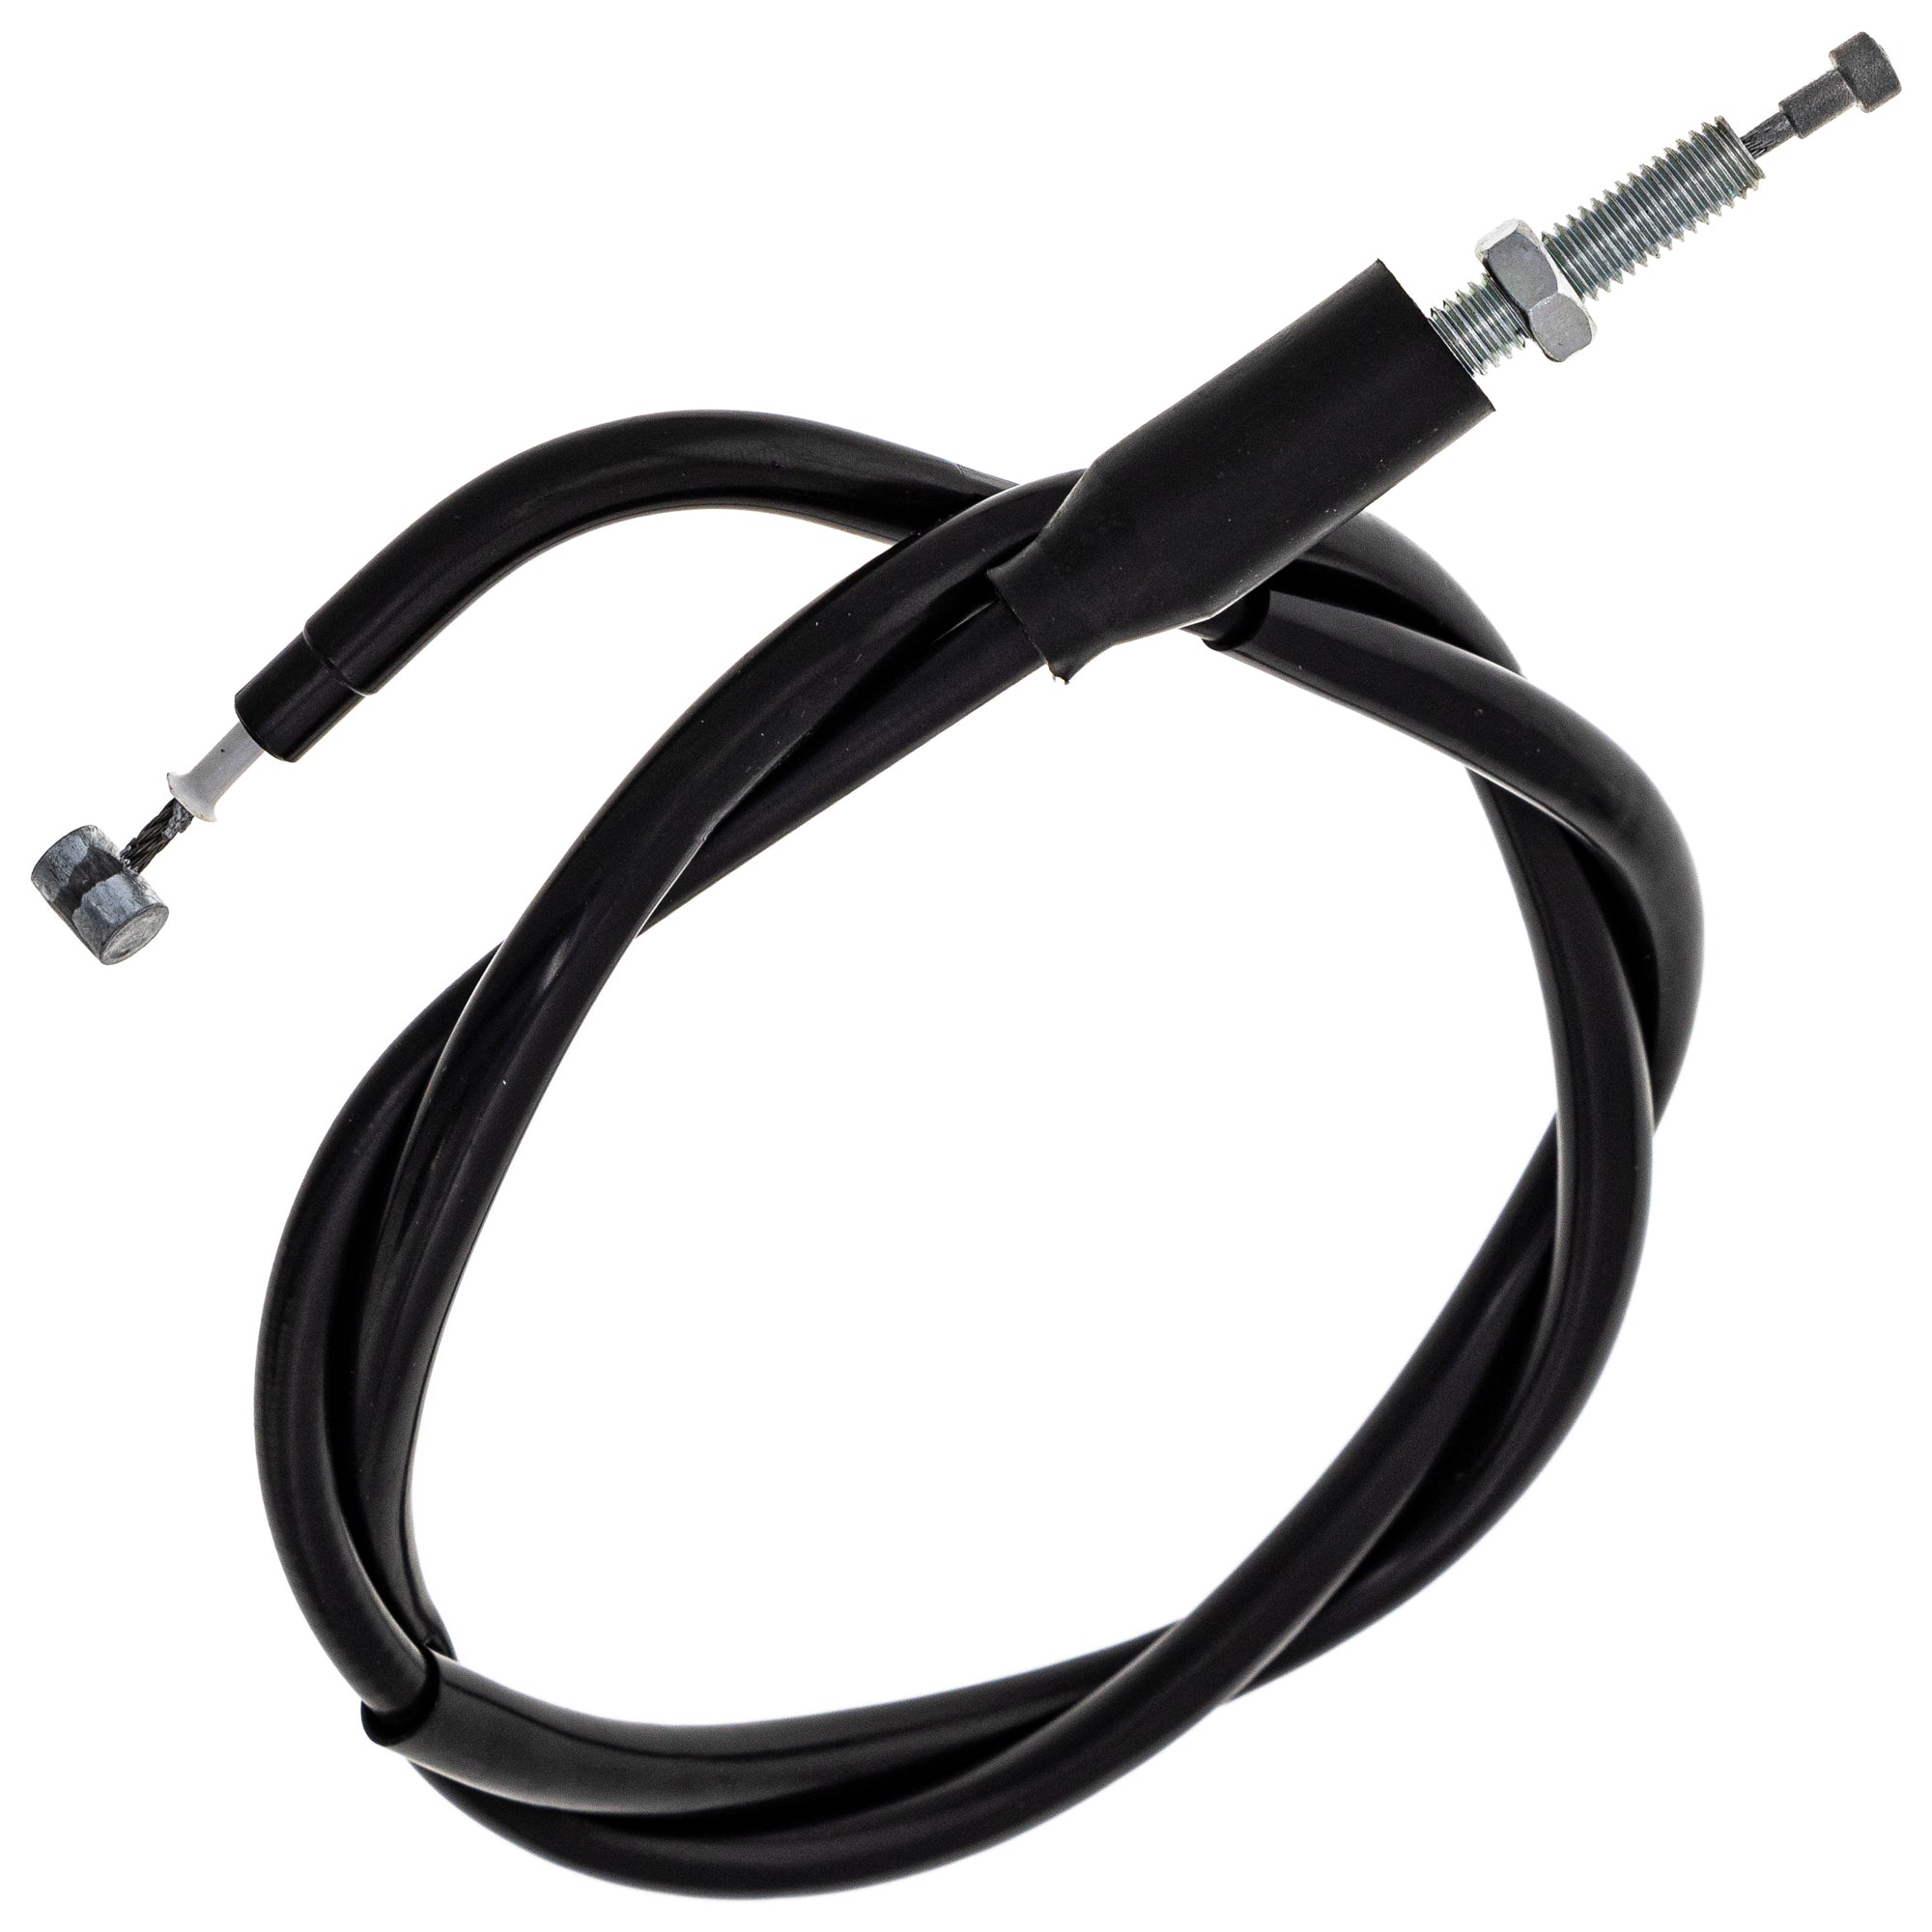 Clutch Cable For Suzuki 58200-20C00 58200-19C00 58200-08F01 58200-08F00